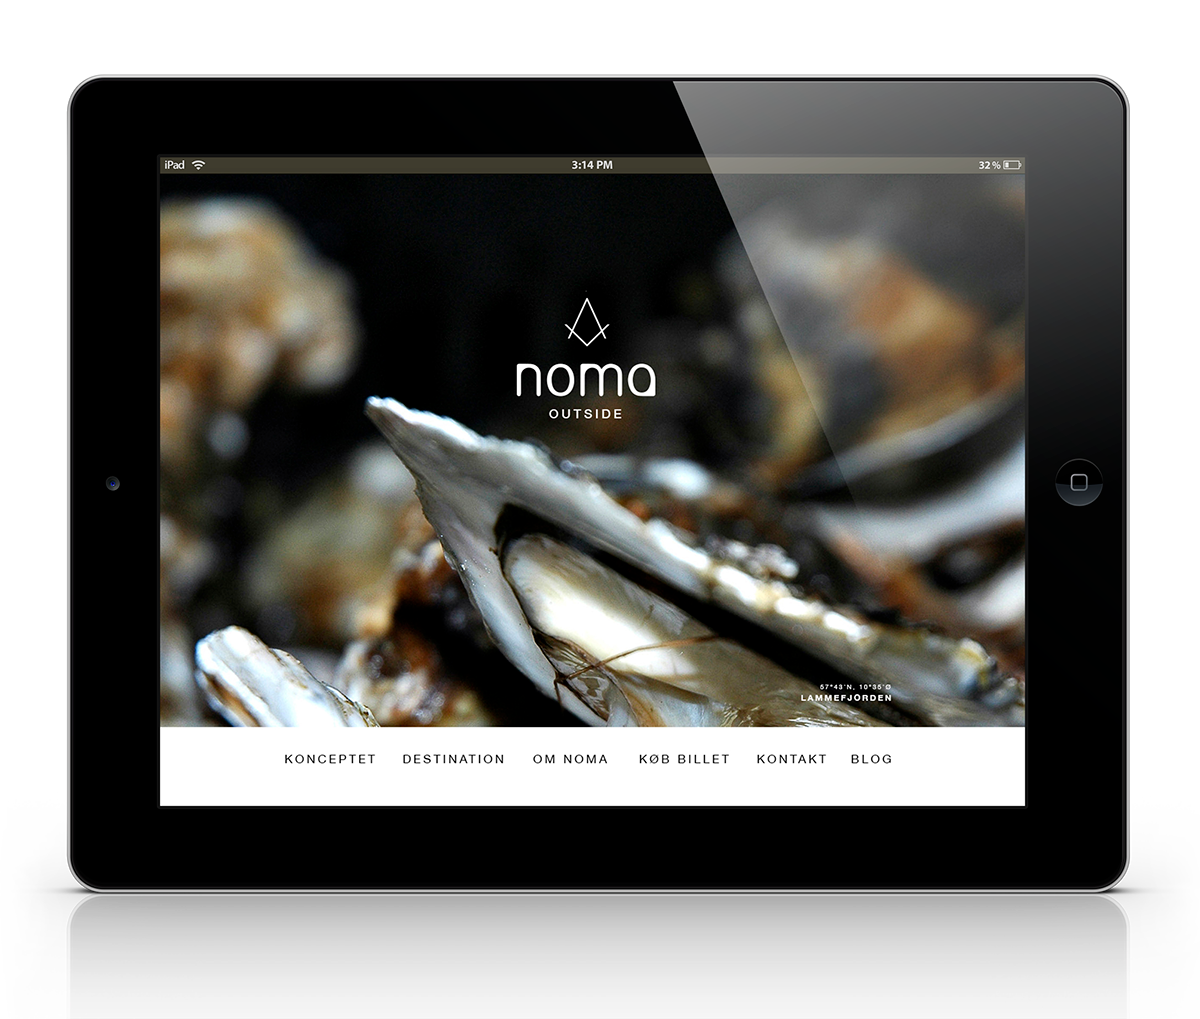 Webdesign  branding  Interaction Design  FOOD  Noma  outside restaurant  danish cuisine commodities compas  Destination Rene Redzepi  chef Nature